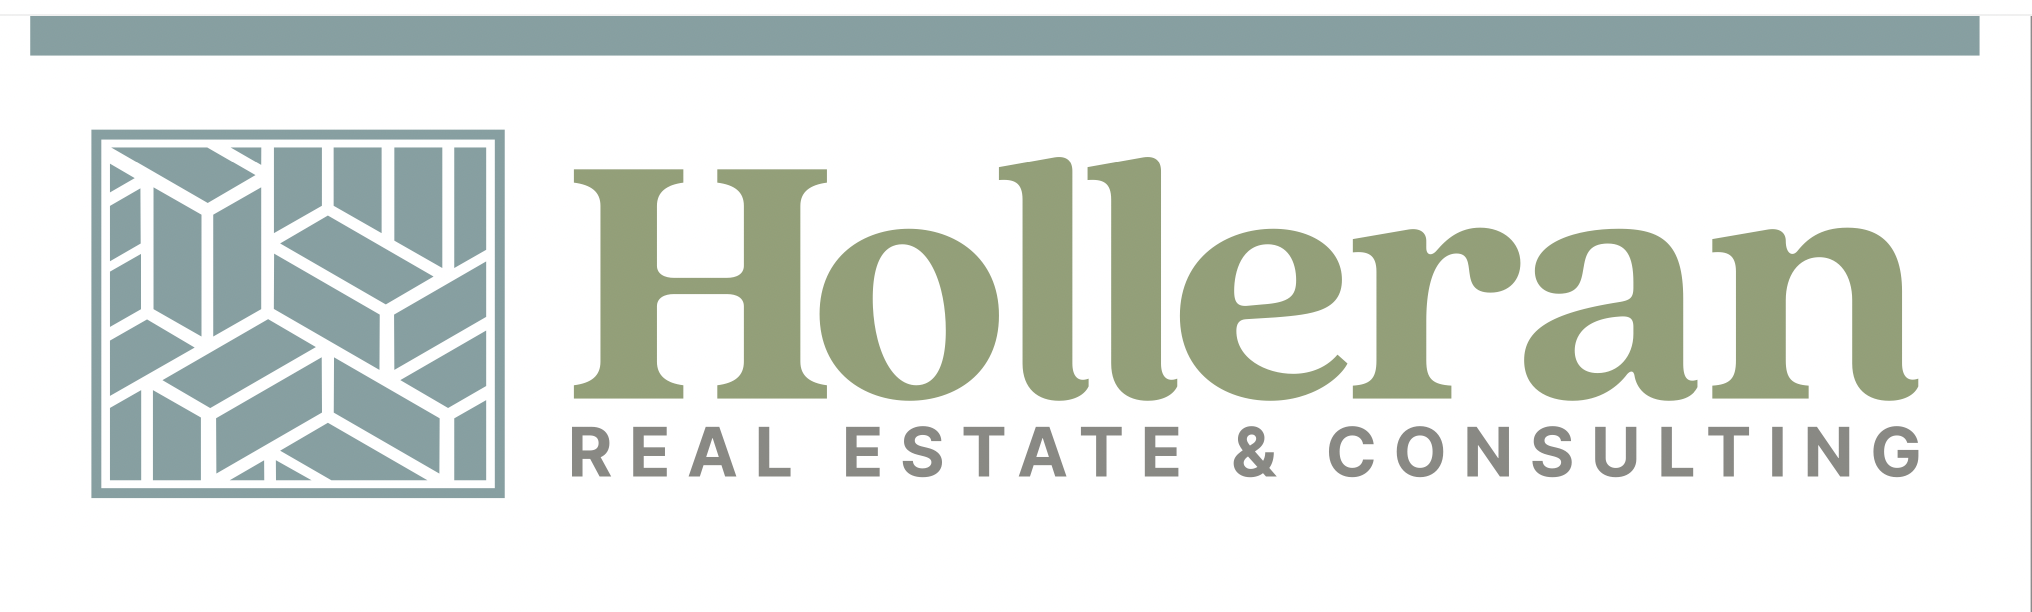 Holleran Real Estate & Consulting